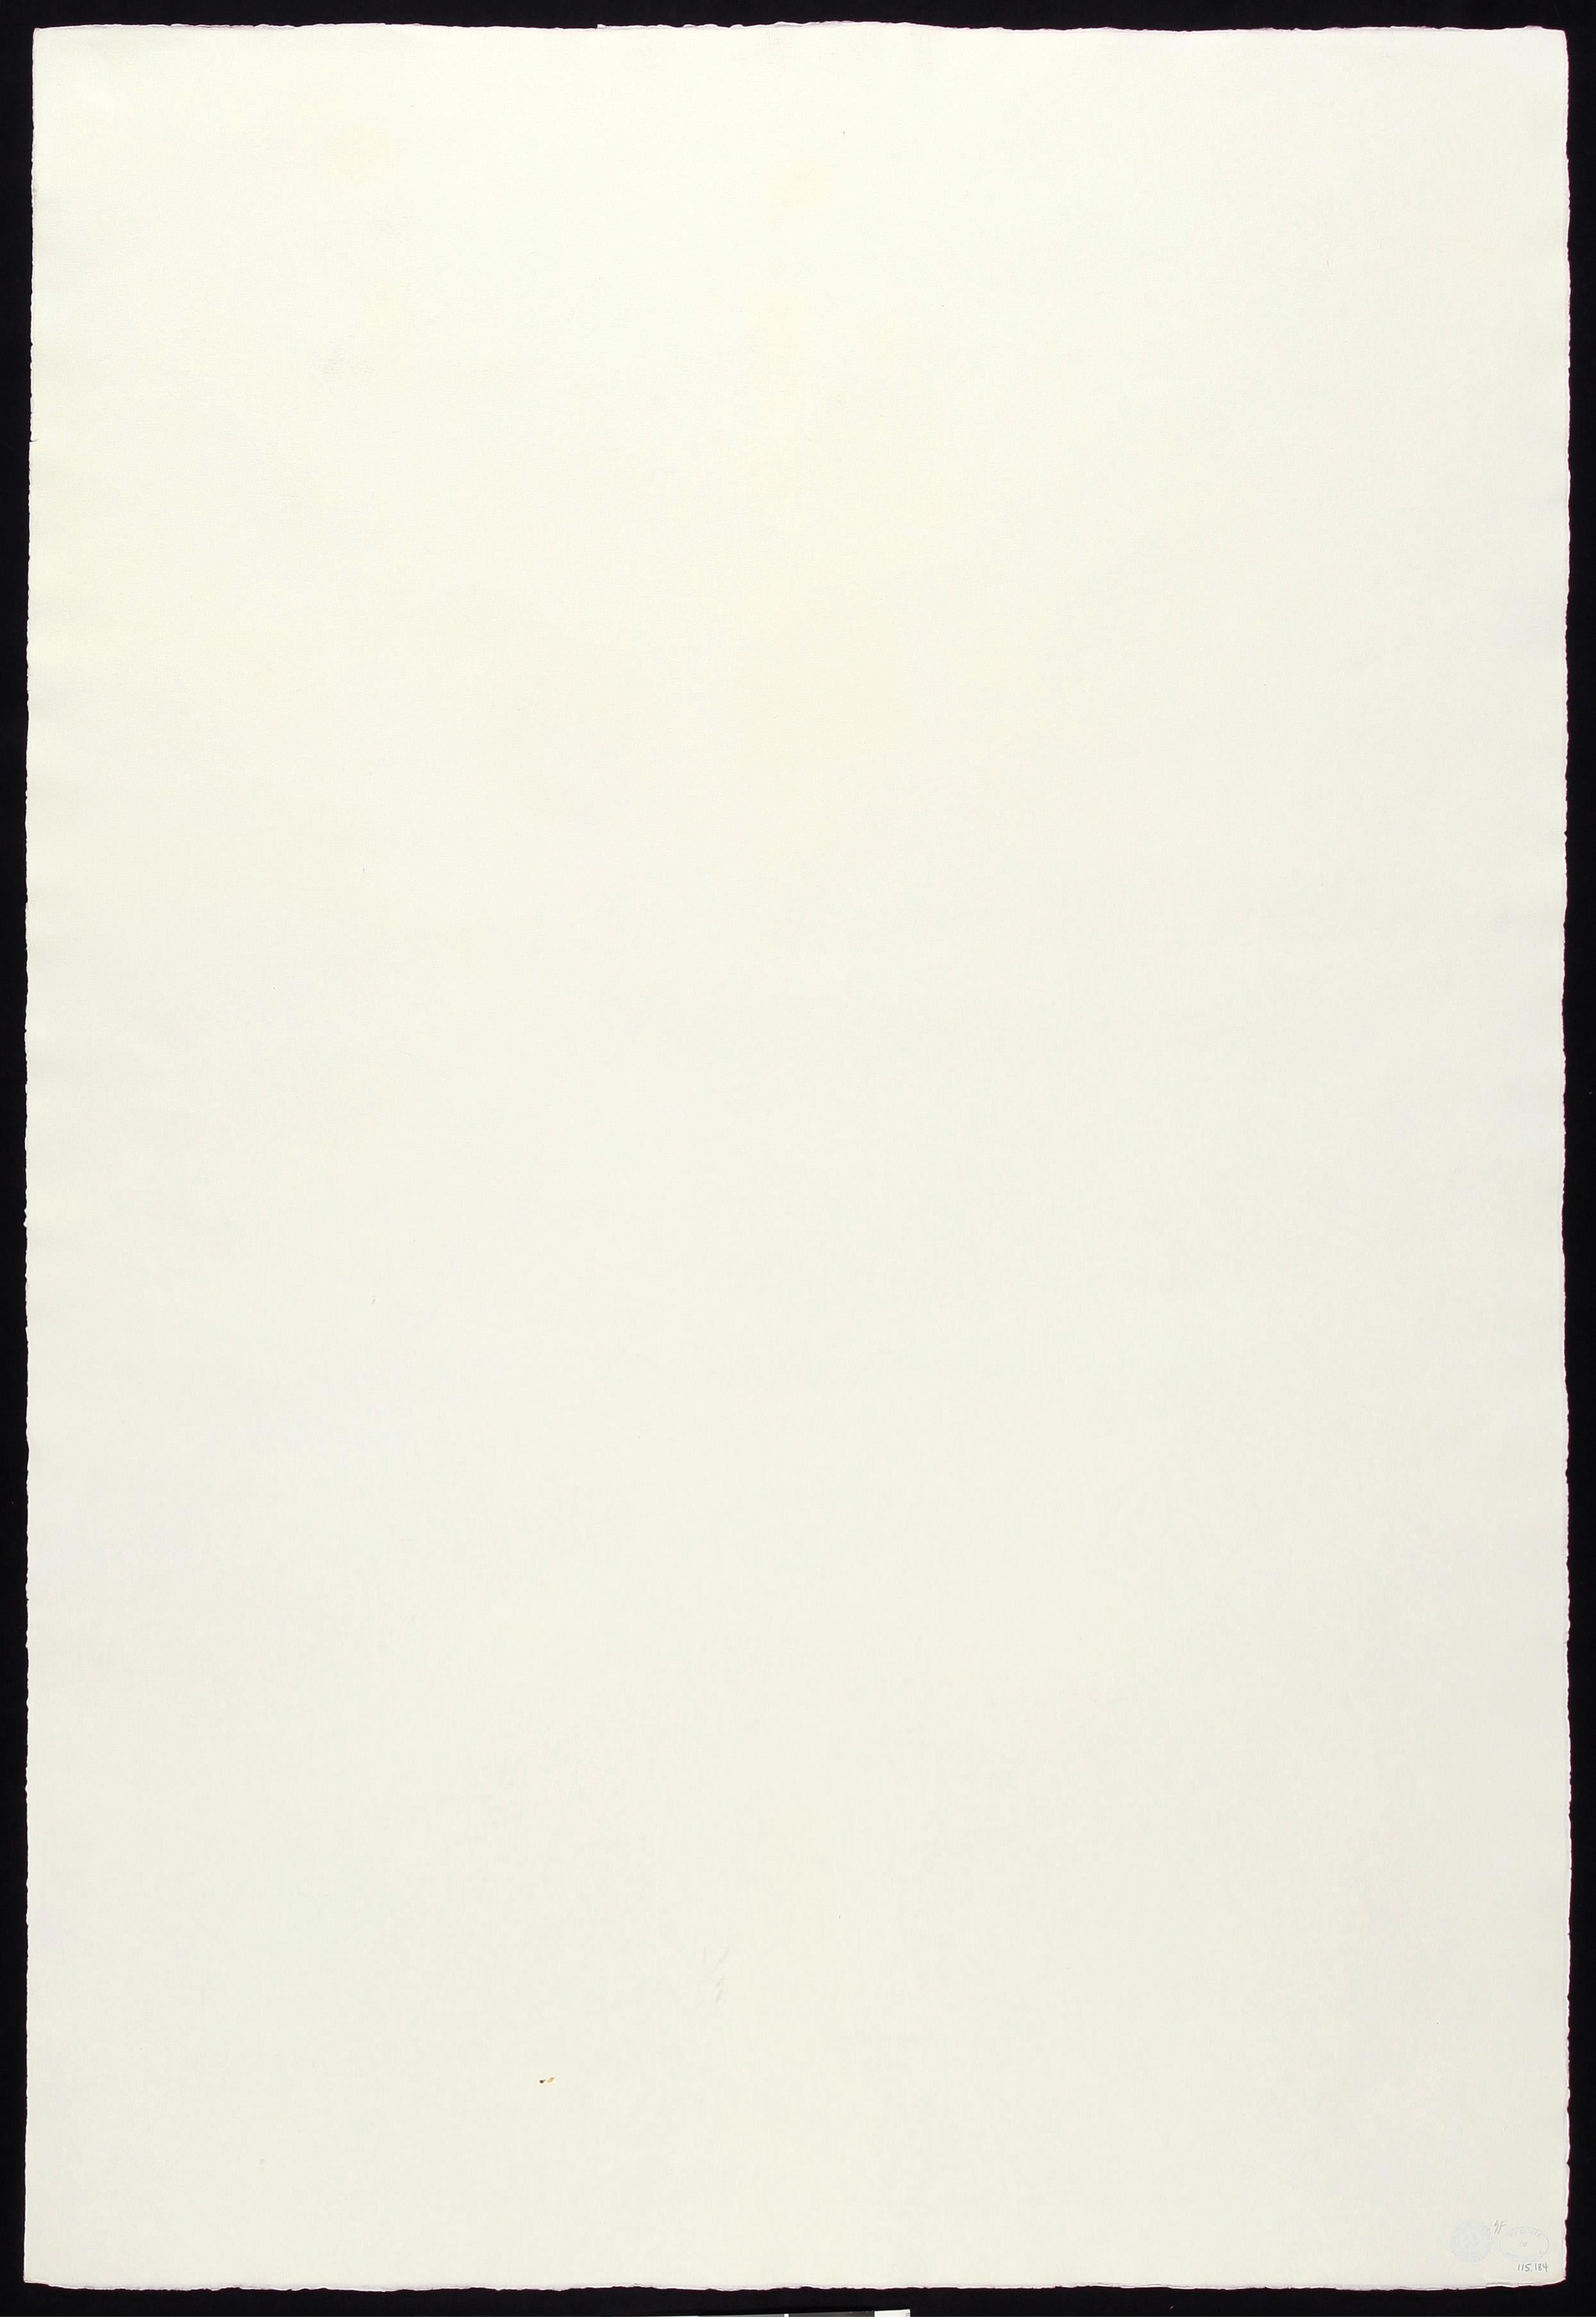 Michael Heizer - White Portrait by Andy Warhol